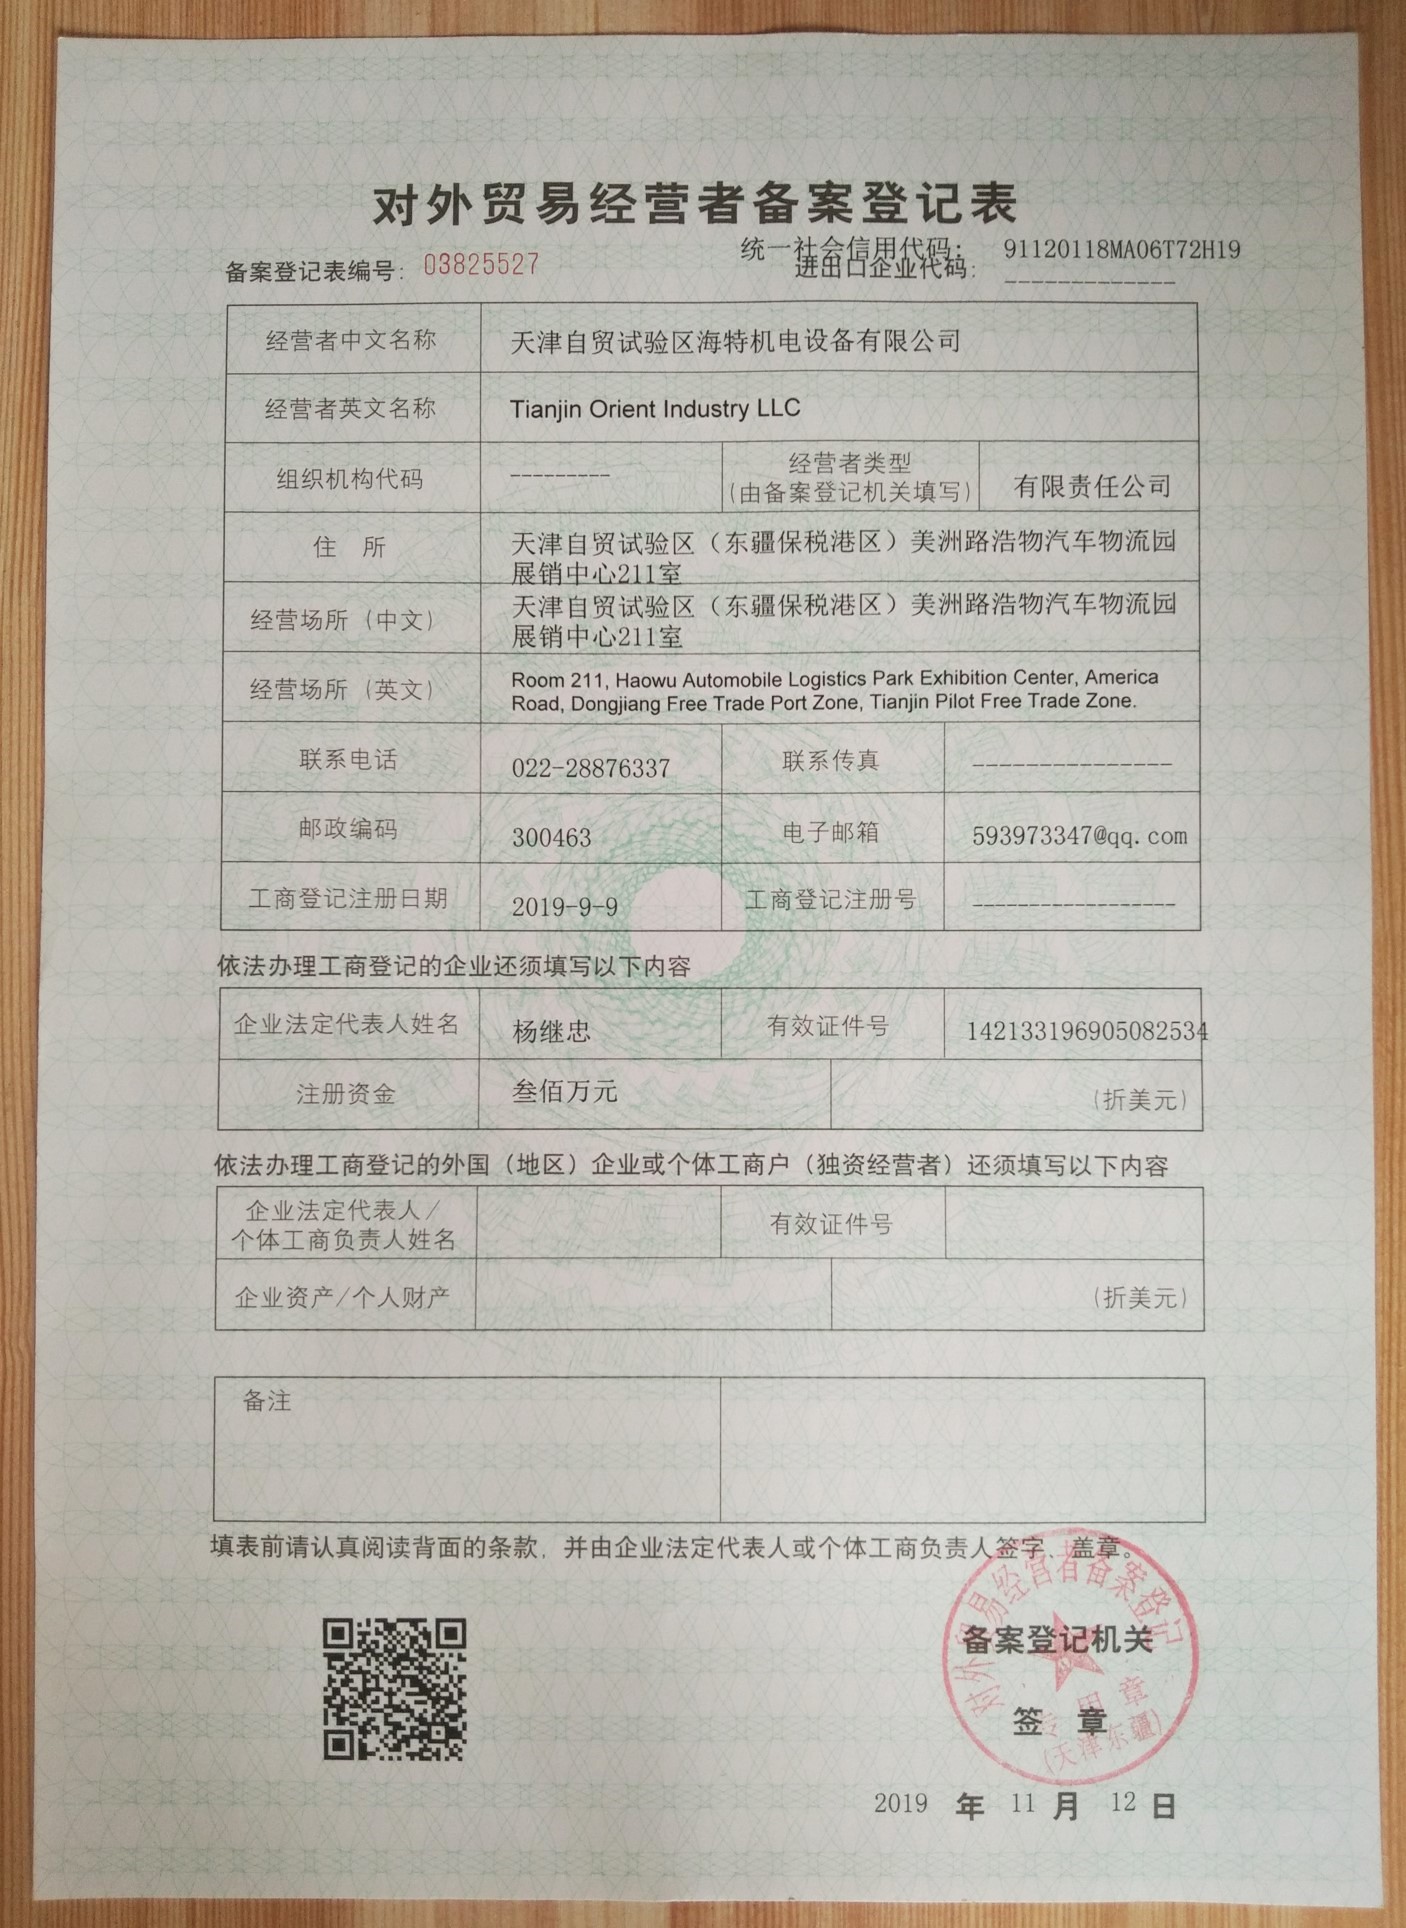 Tianjin Orient Industry LLC